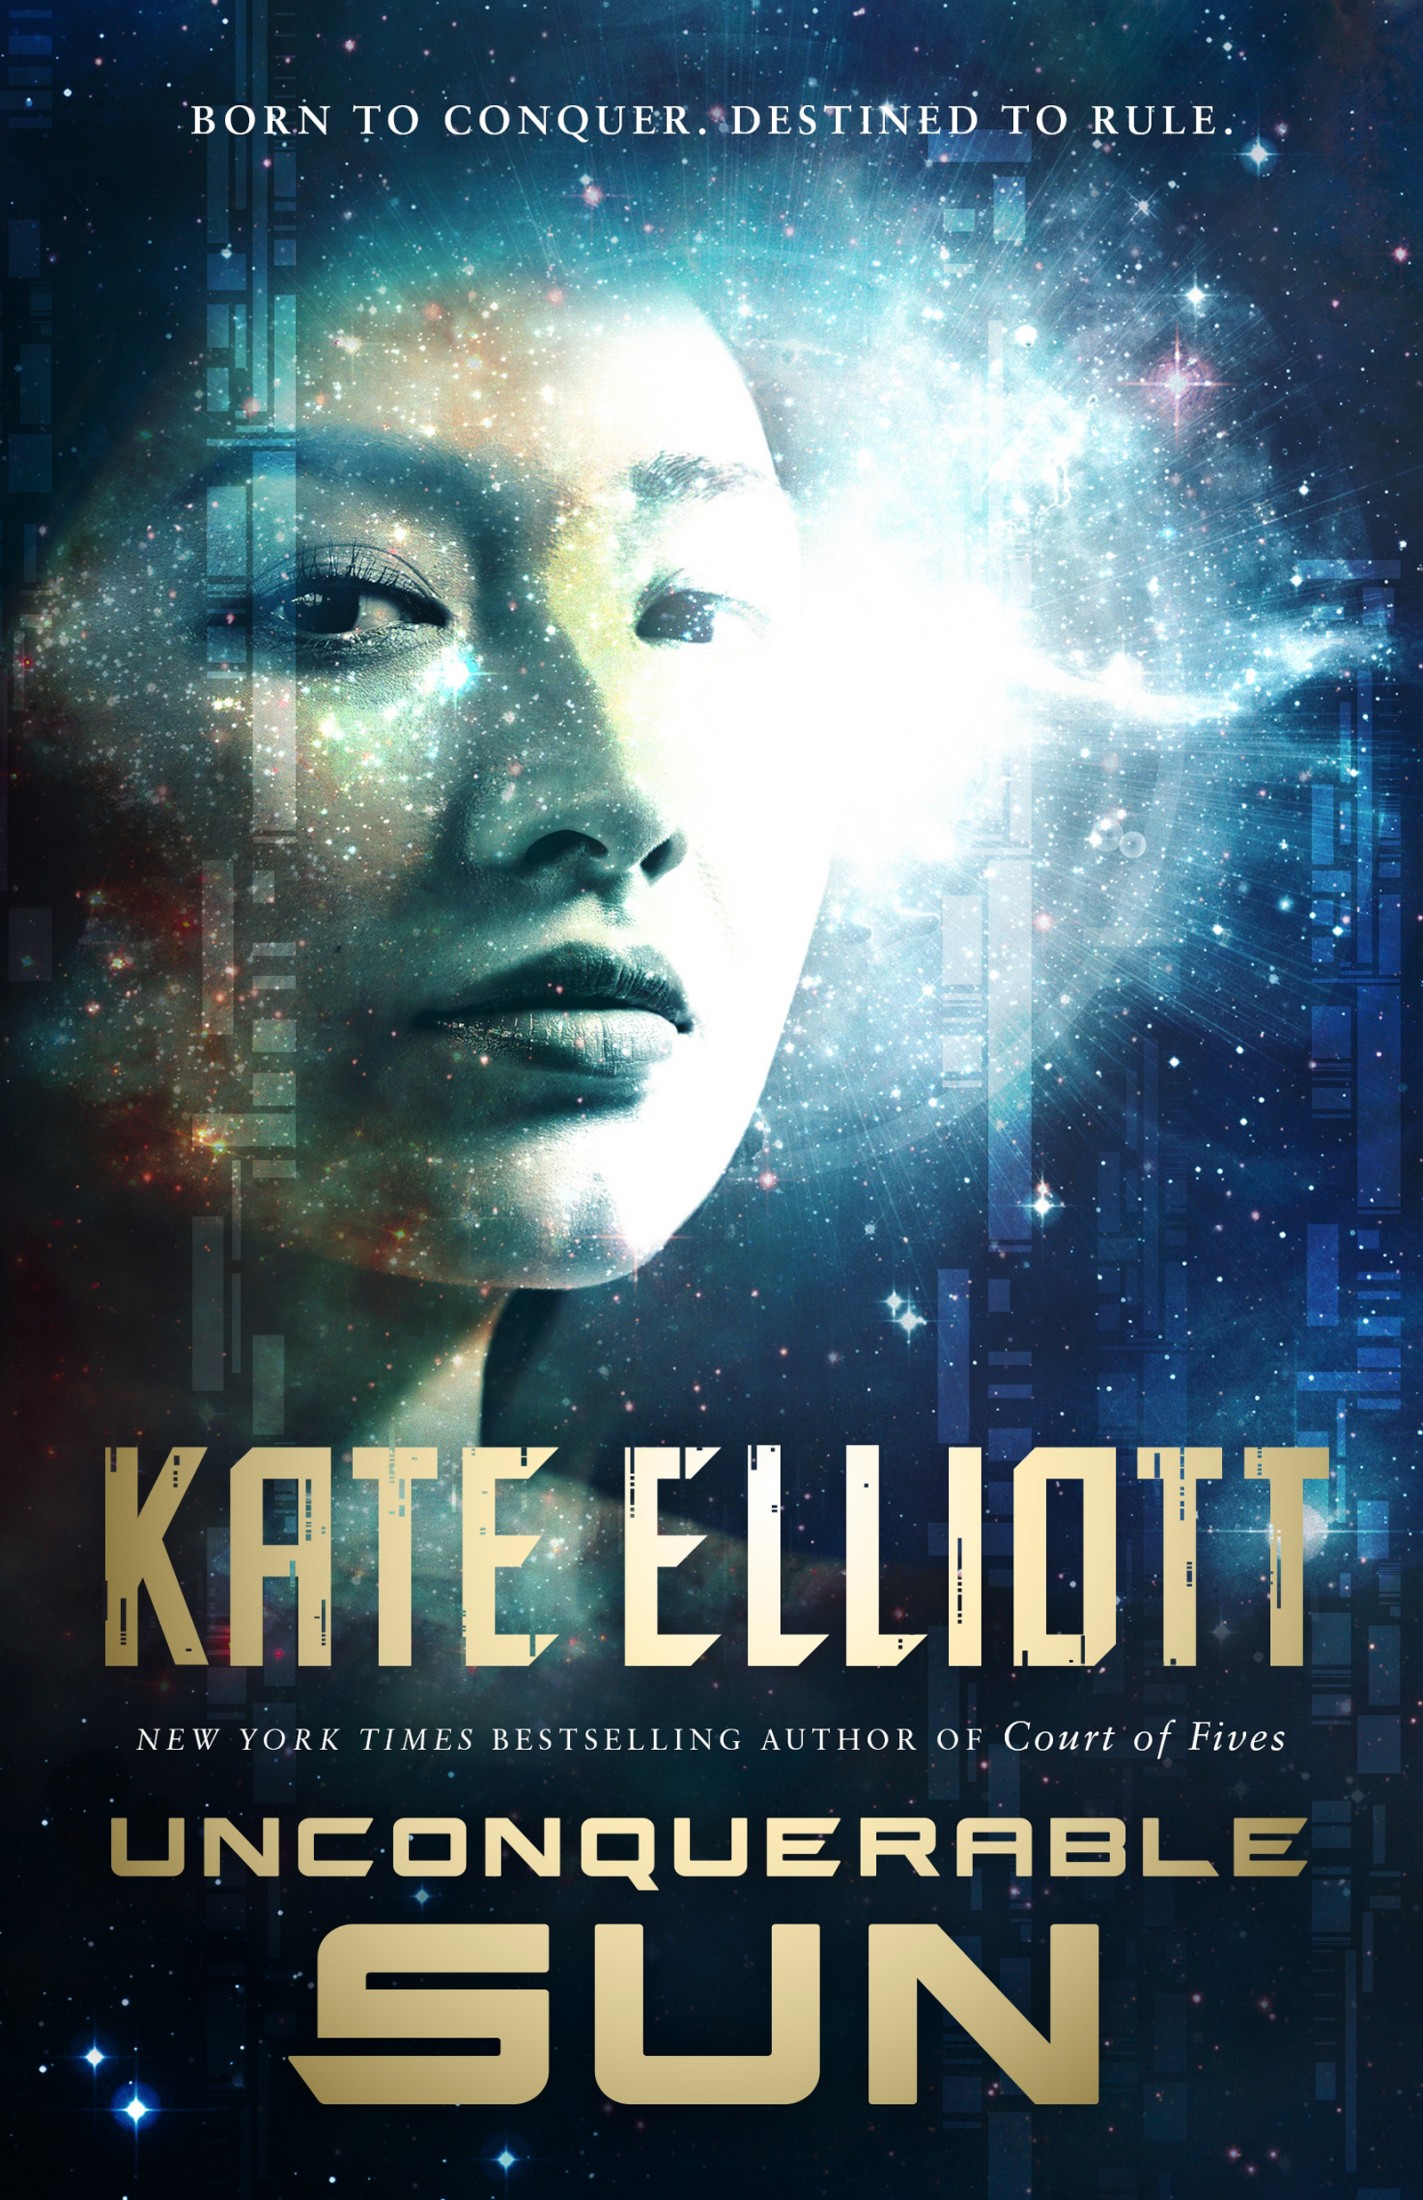 Kate Elliott: Unconquerable Sun (2020, Tor Books)